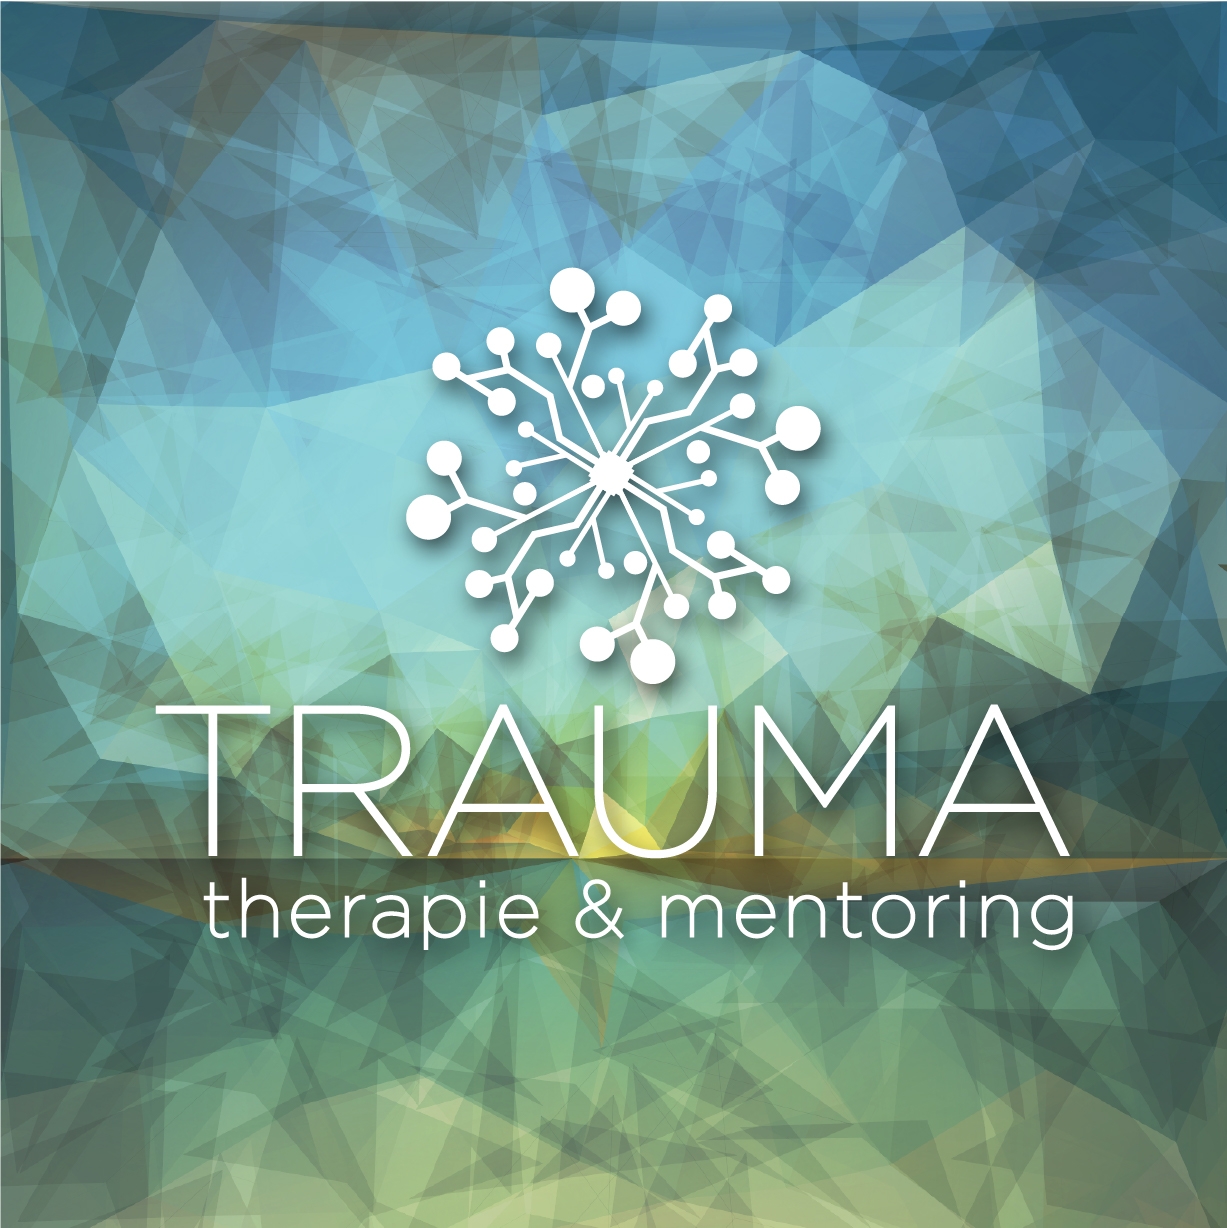 Traumatherapie bij stress, depressie en burnout